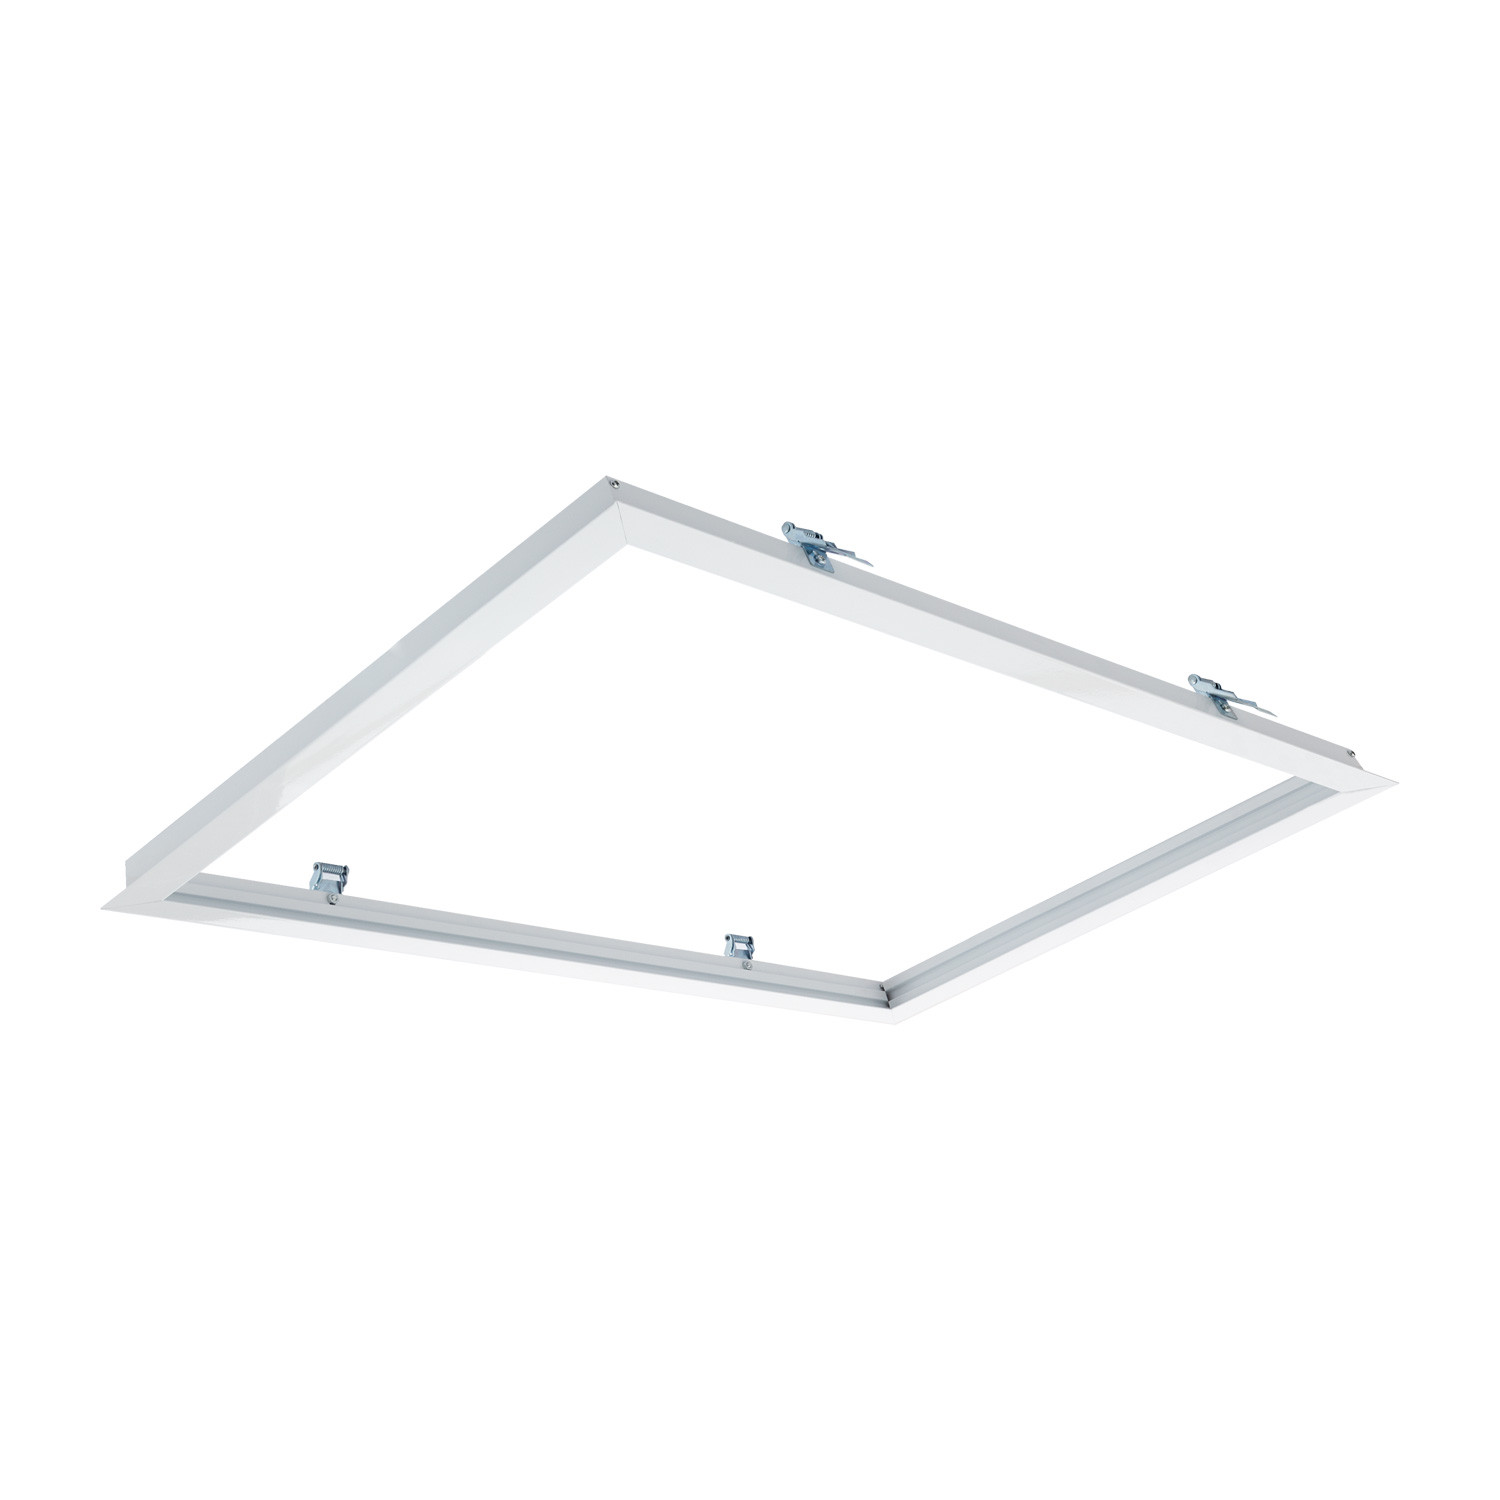 Marco para panel LED aluminio empotrable 325*625mm